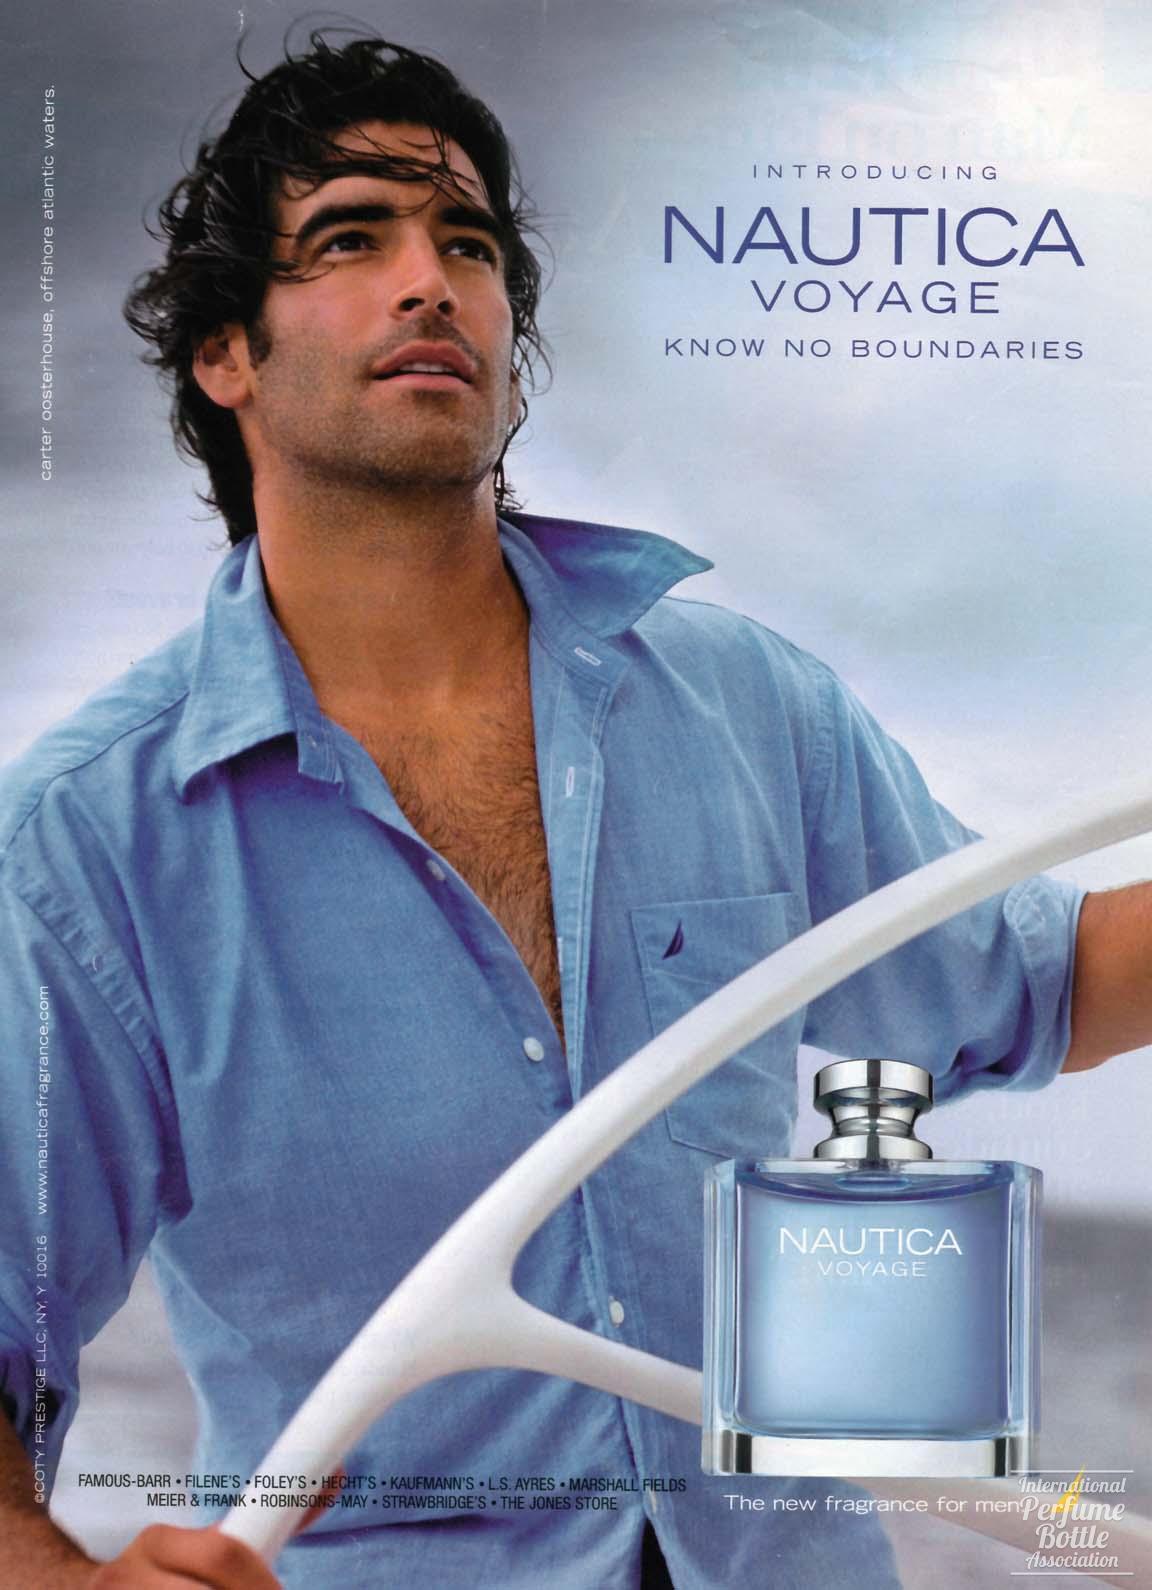 "Voyage" by Nautica Advertisement - 2006